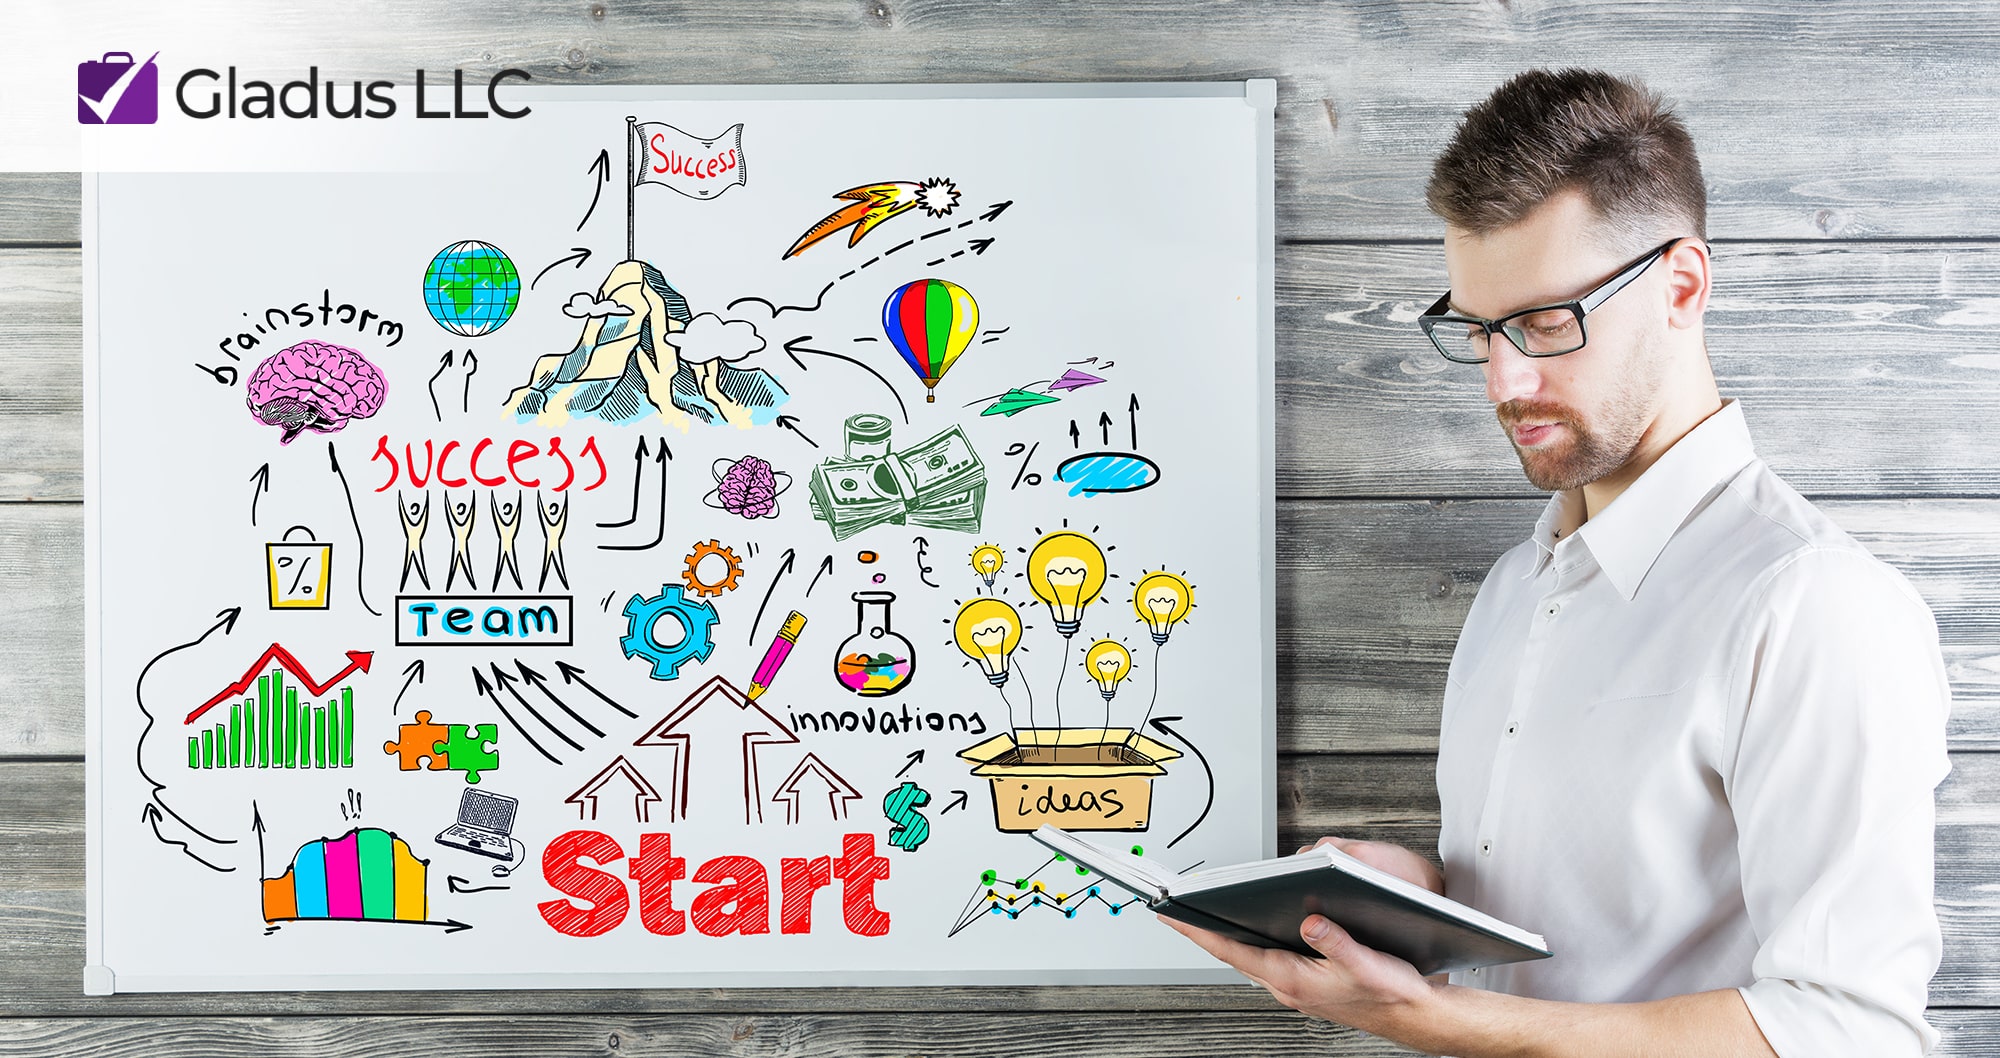 What Must an Entrepreneur Assume when Starting a Business?